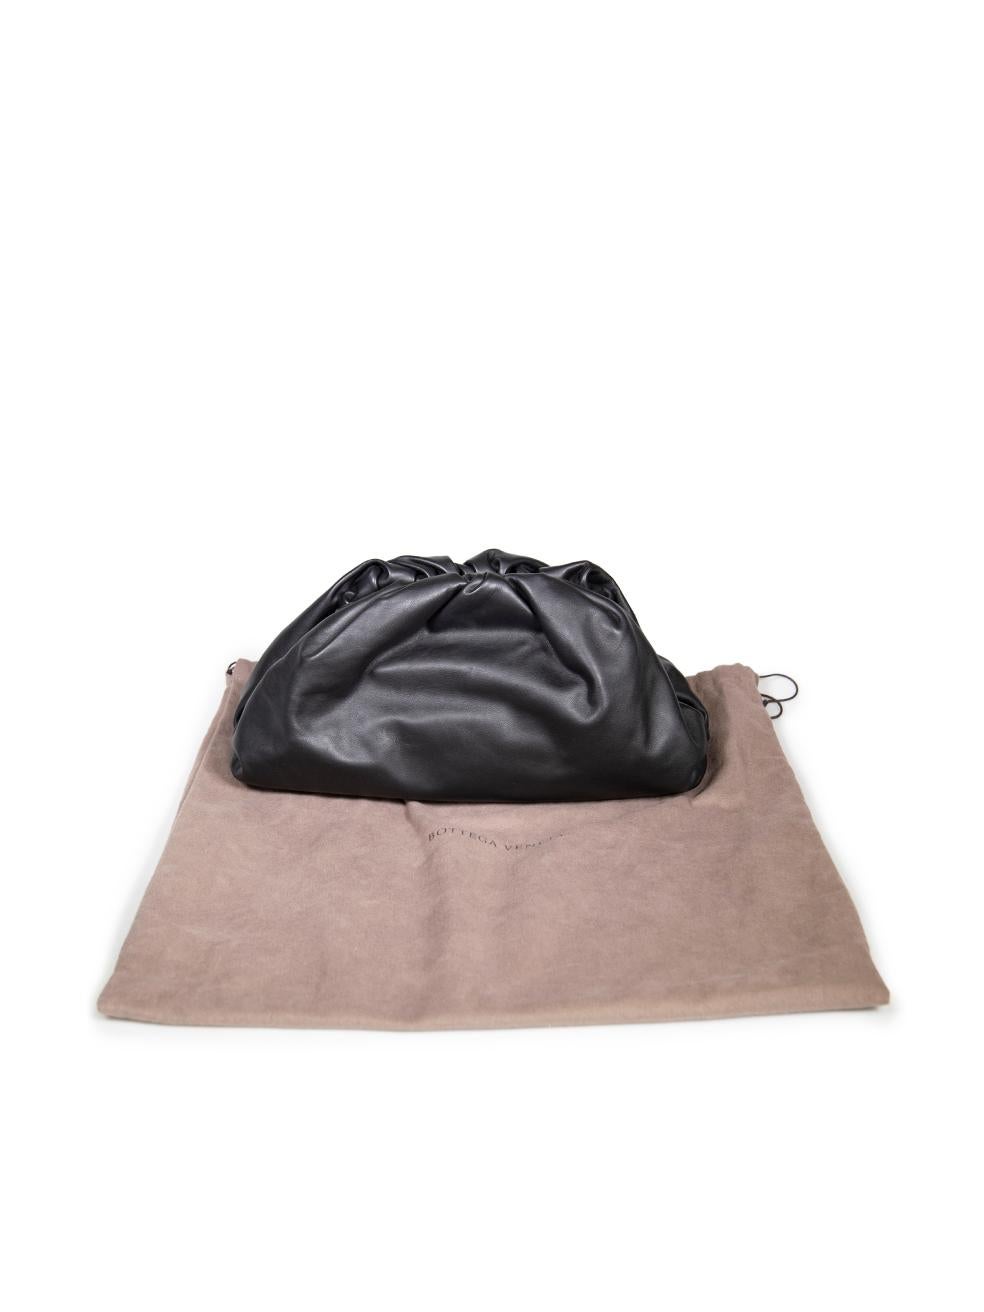 Bottega Veneta Black Leather Large Pouch Clutch For Sale 4